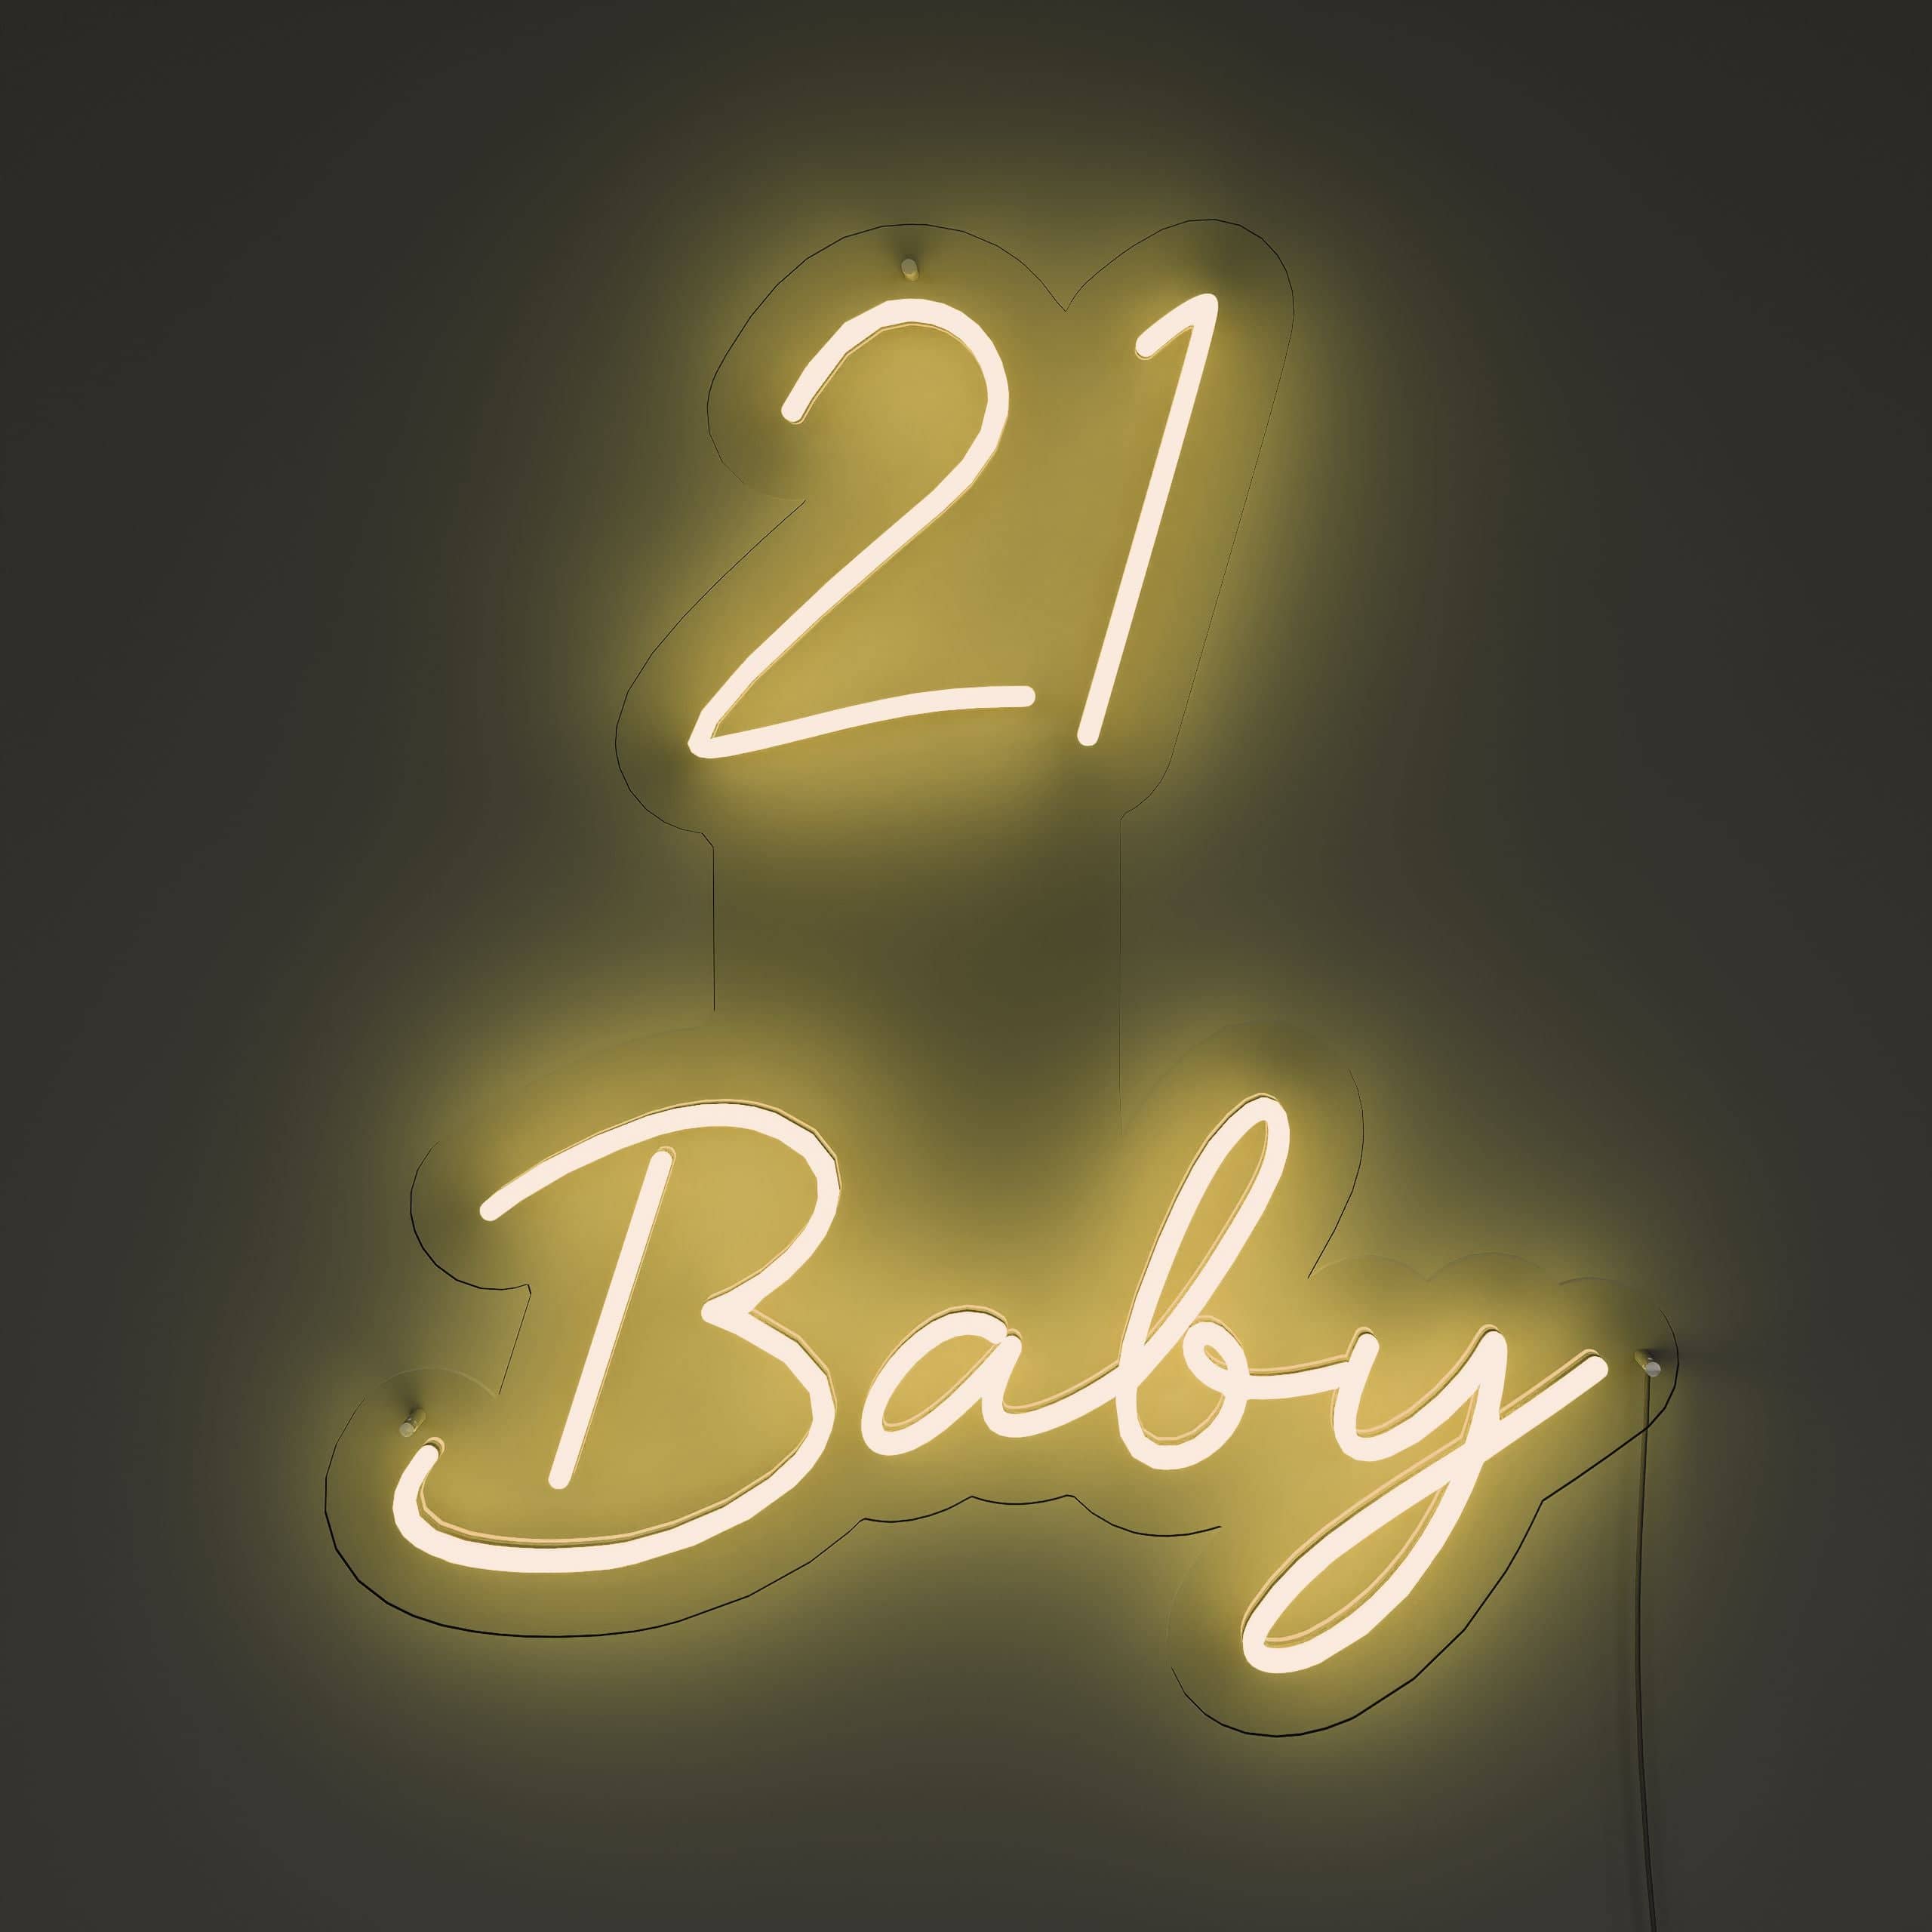 wishing-you-a-sensational-21st-birthday!-neon-sign-lite